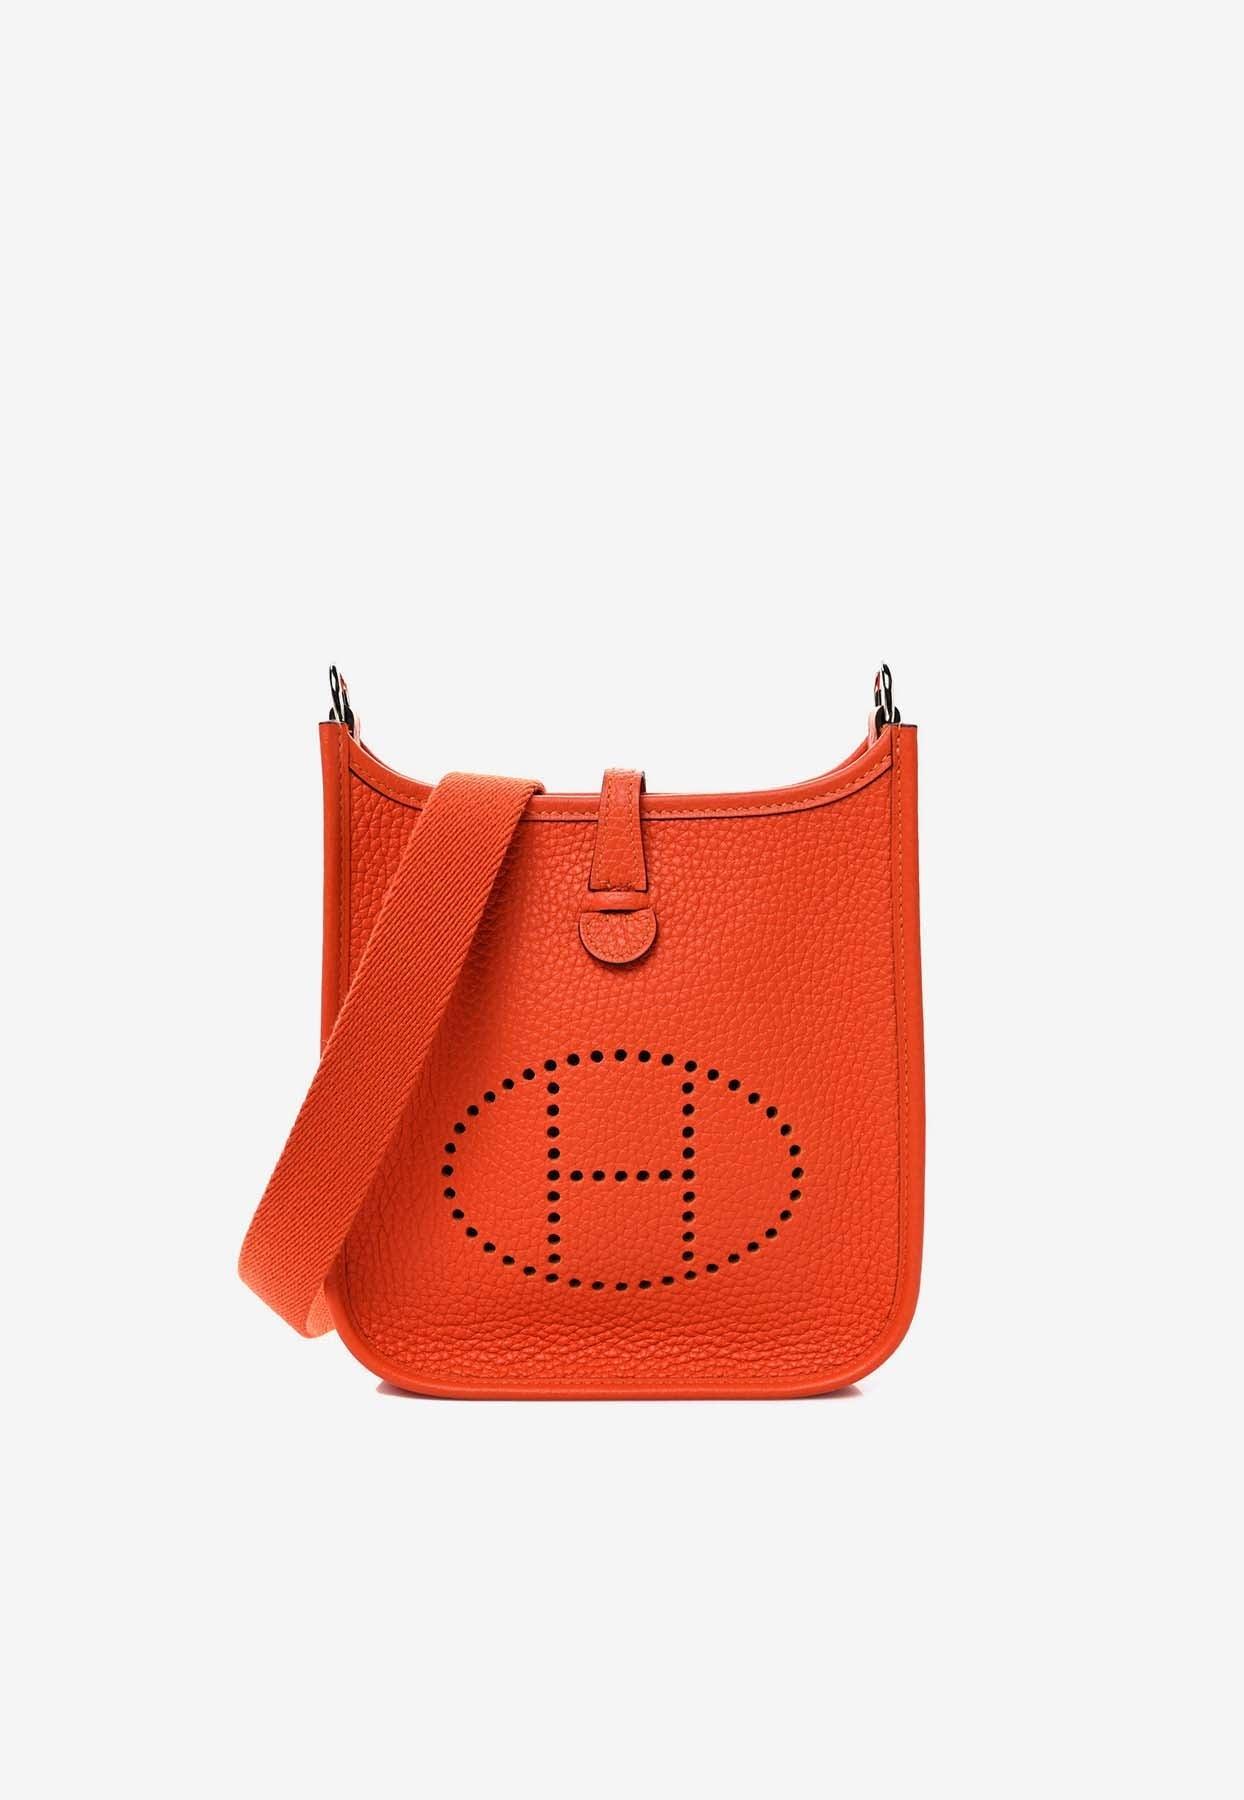 Hermes Orange Evelyne Bag